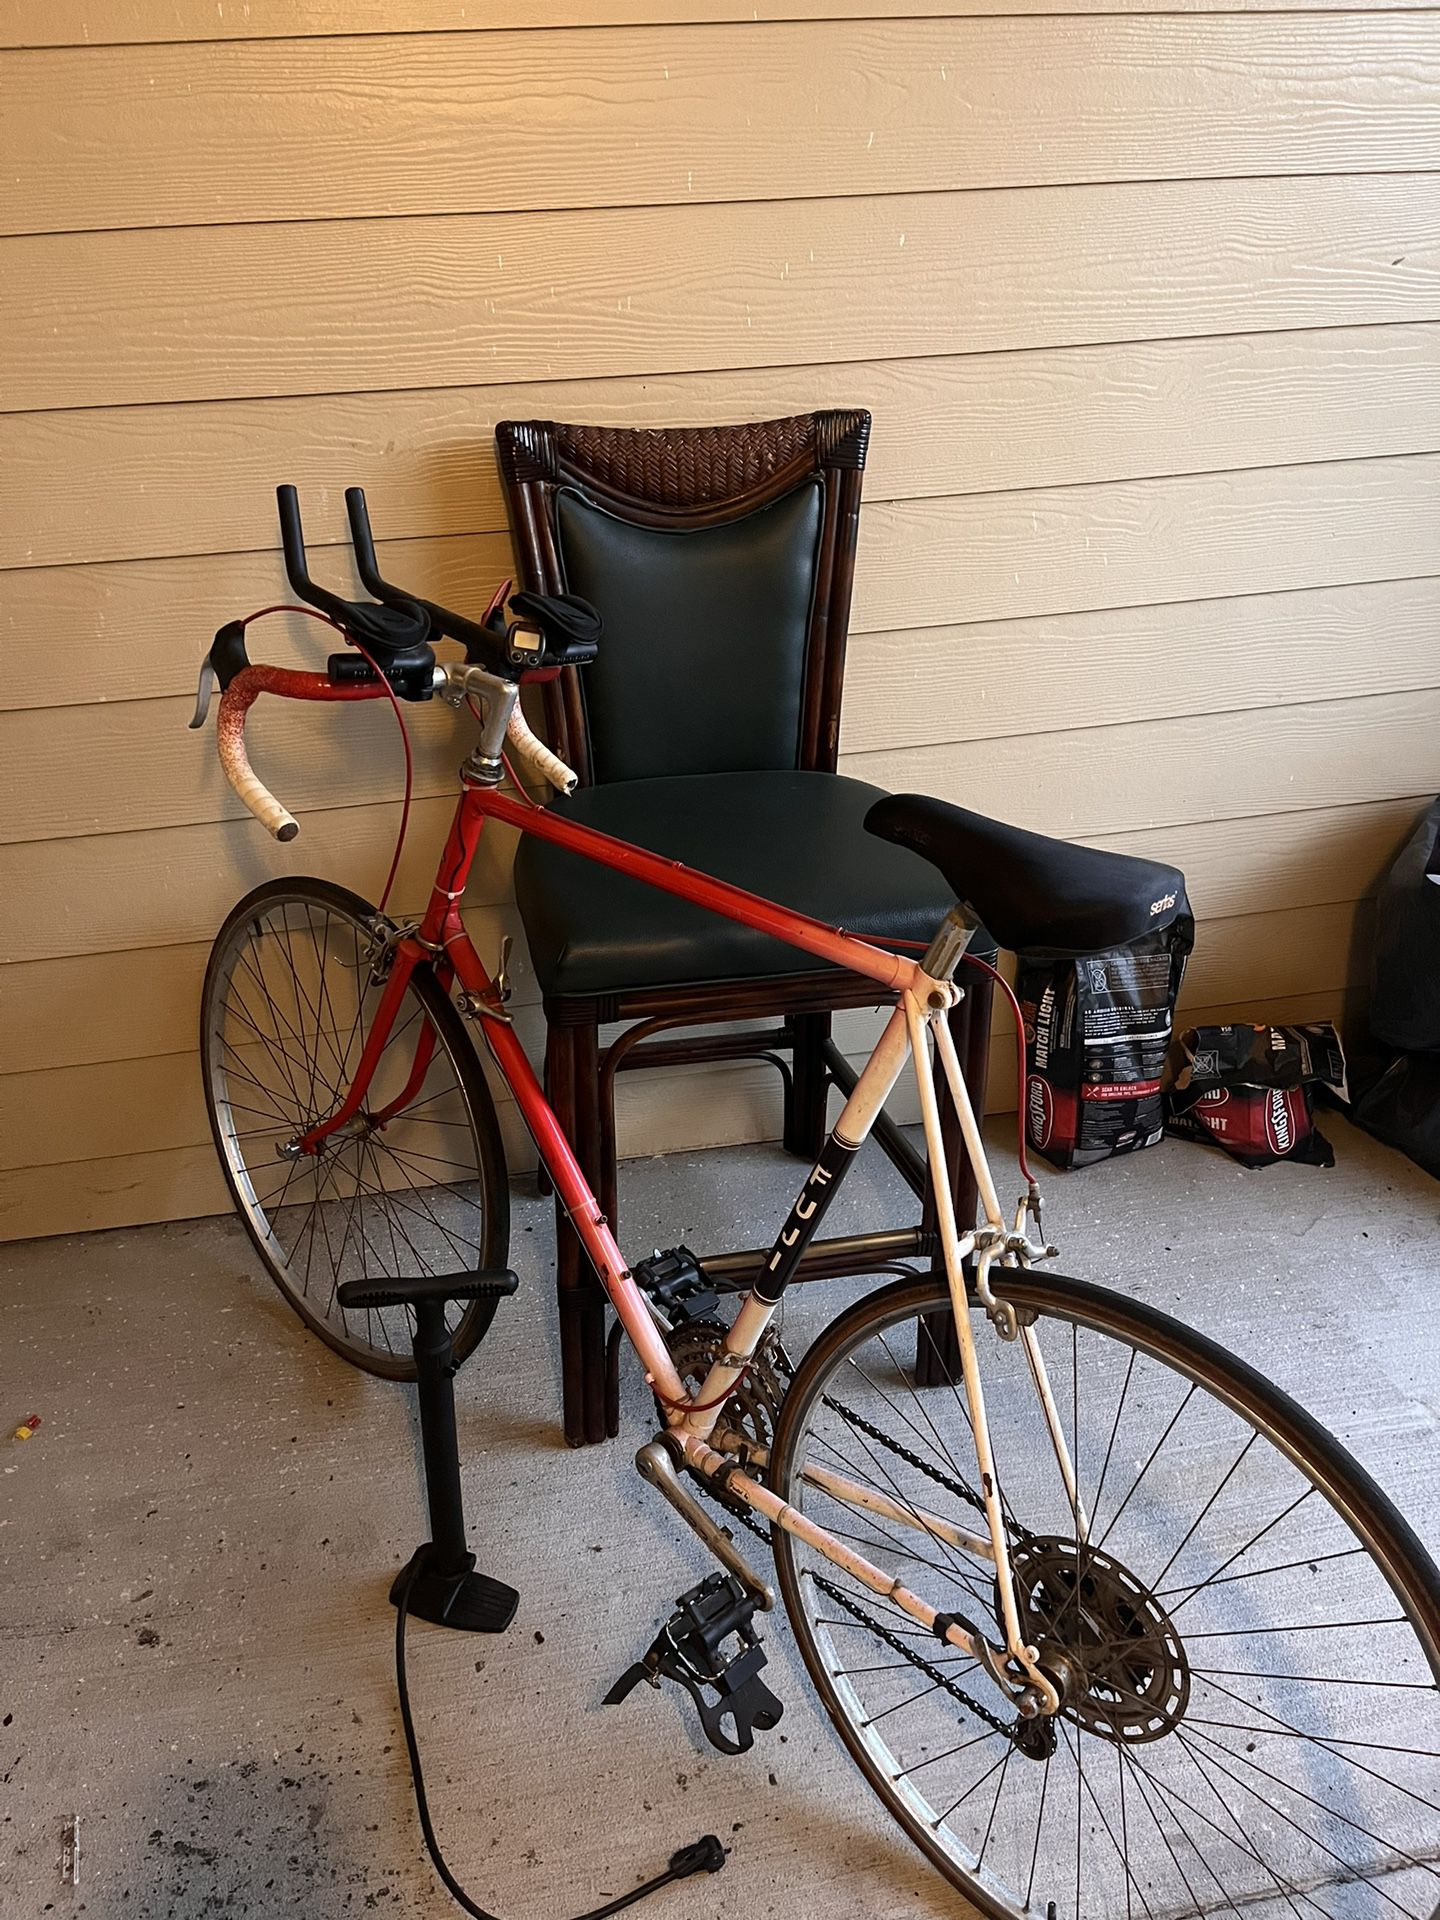 Bike & Chair